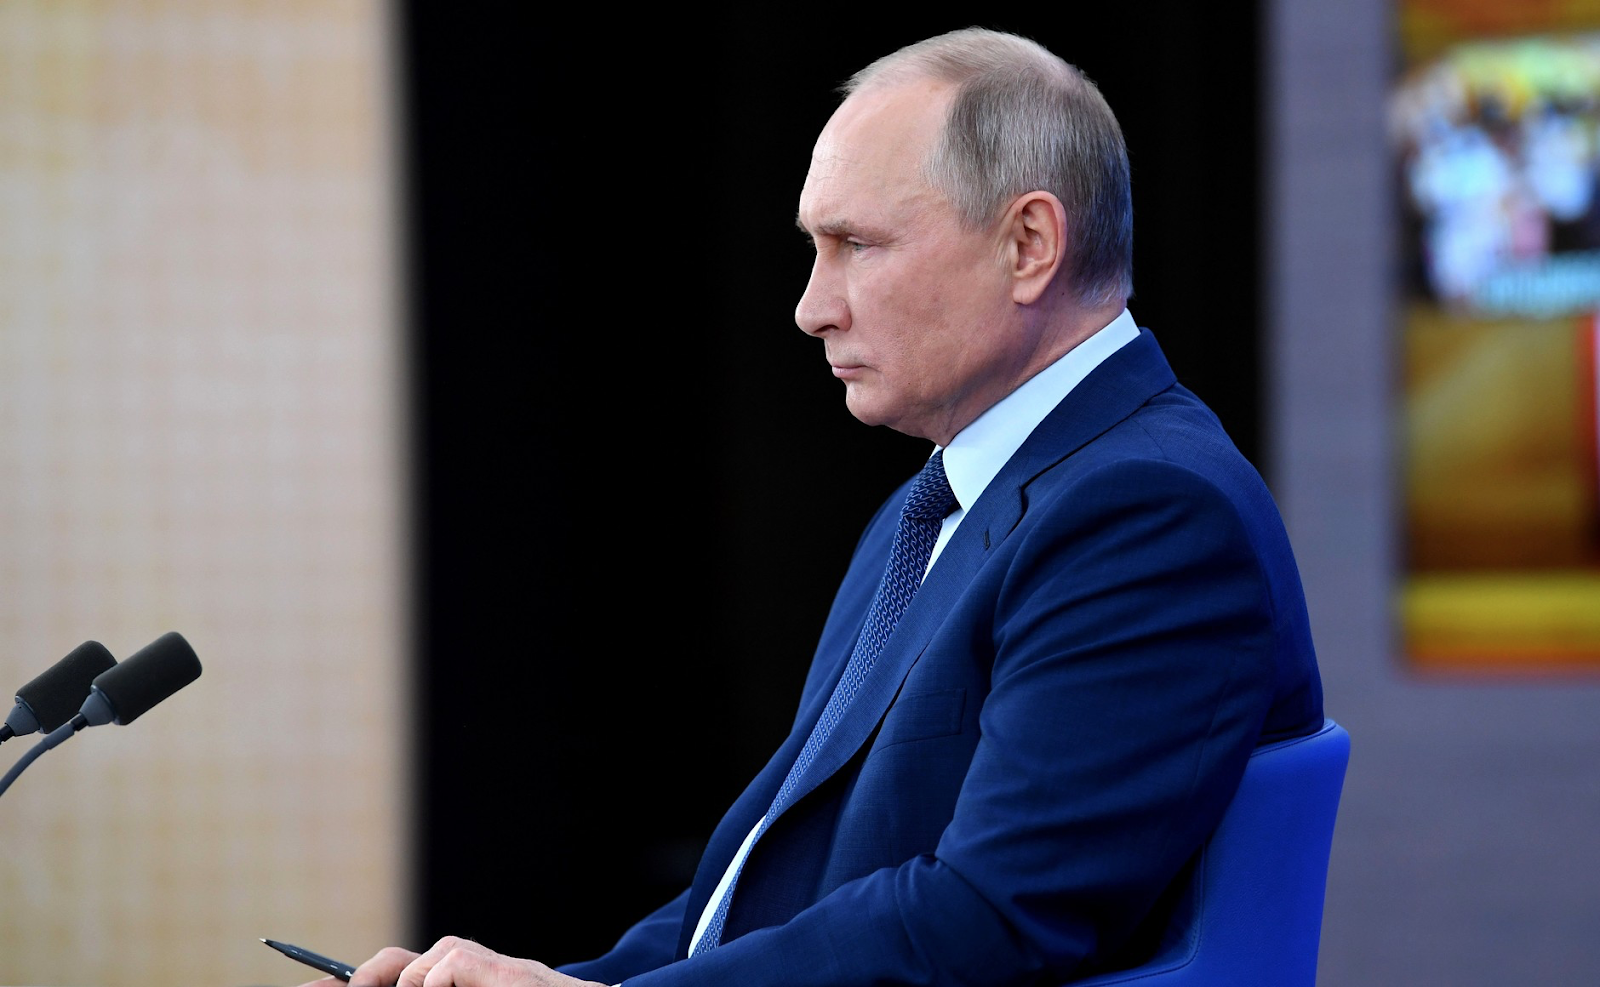 President Putin's news conference